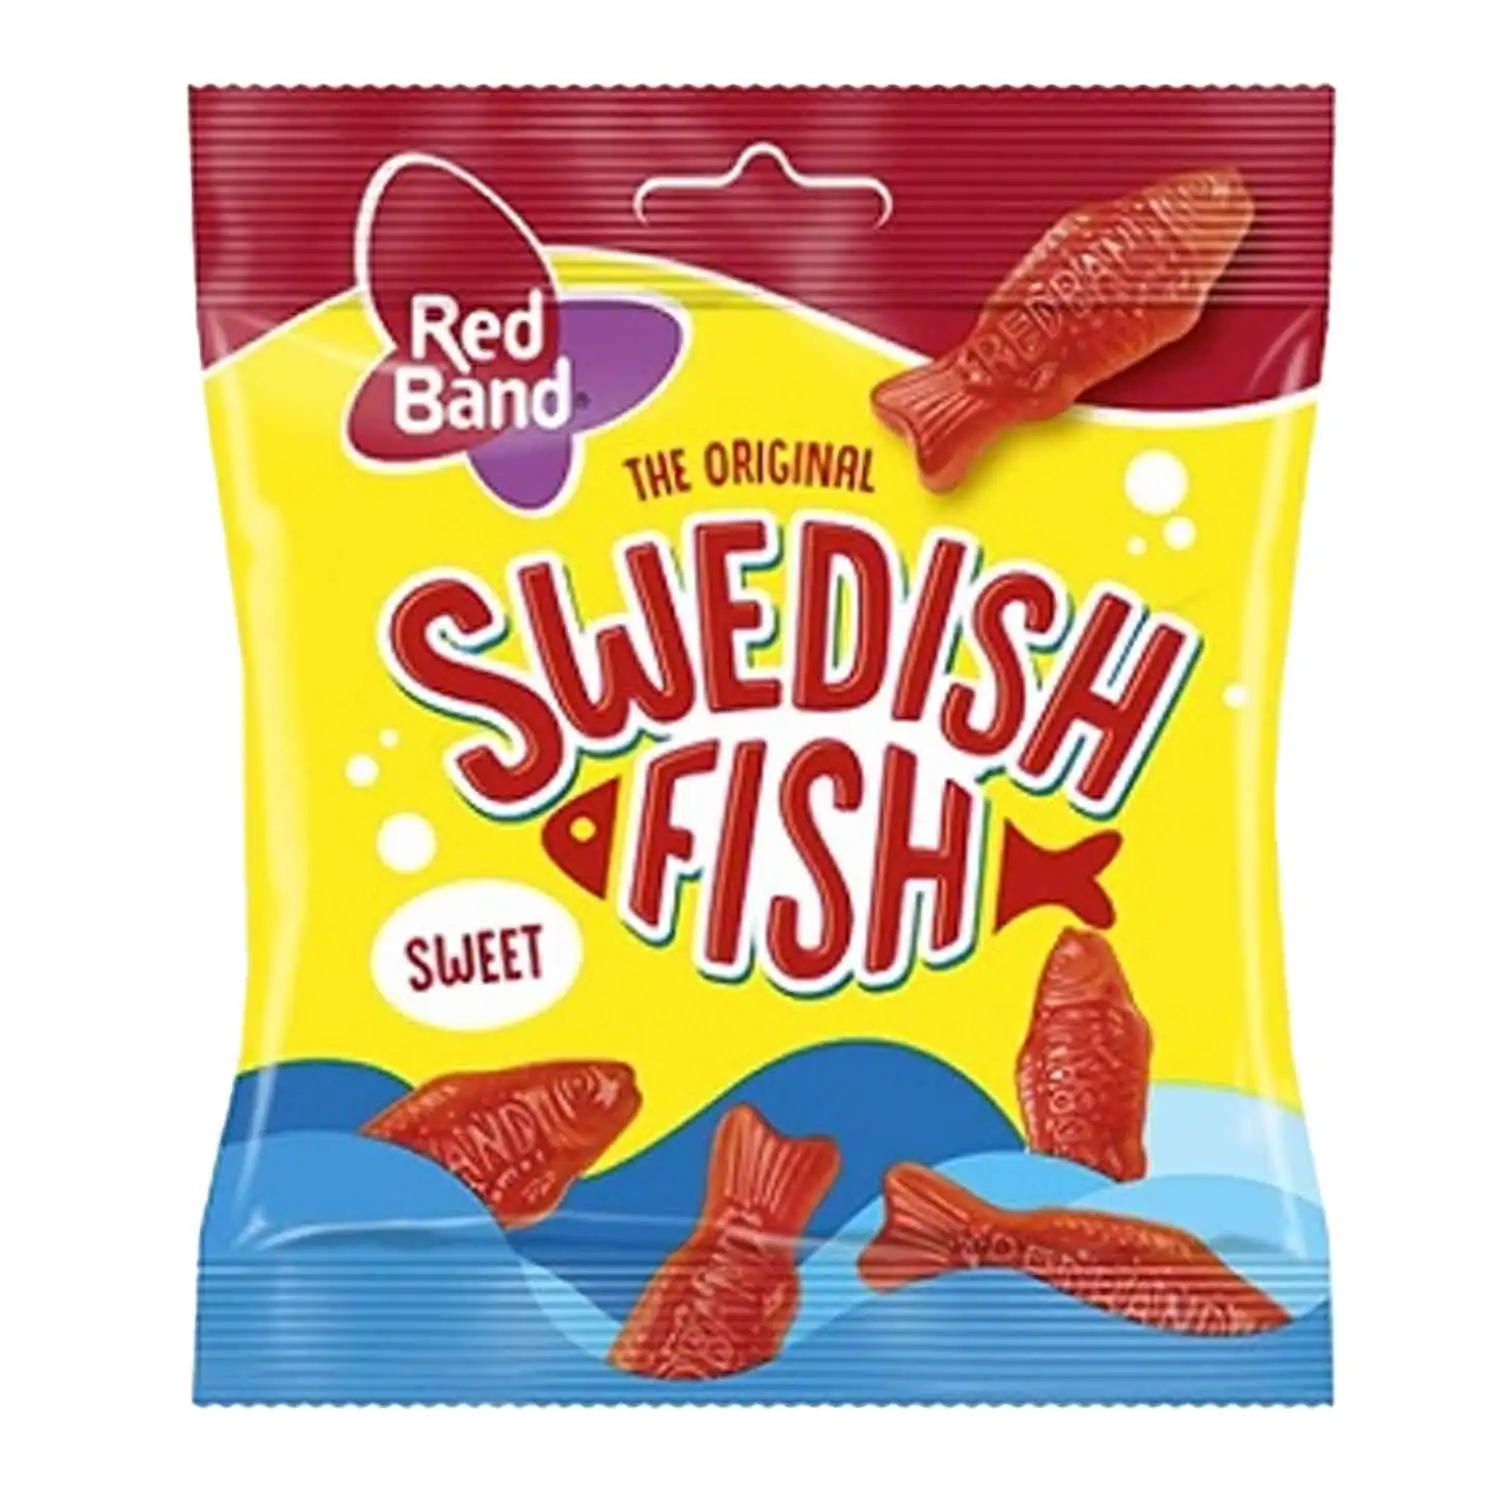 Red Band swedish fish 100g